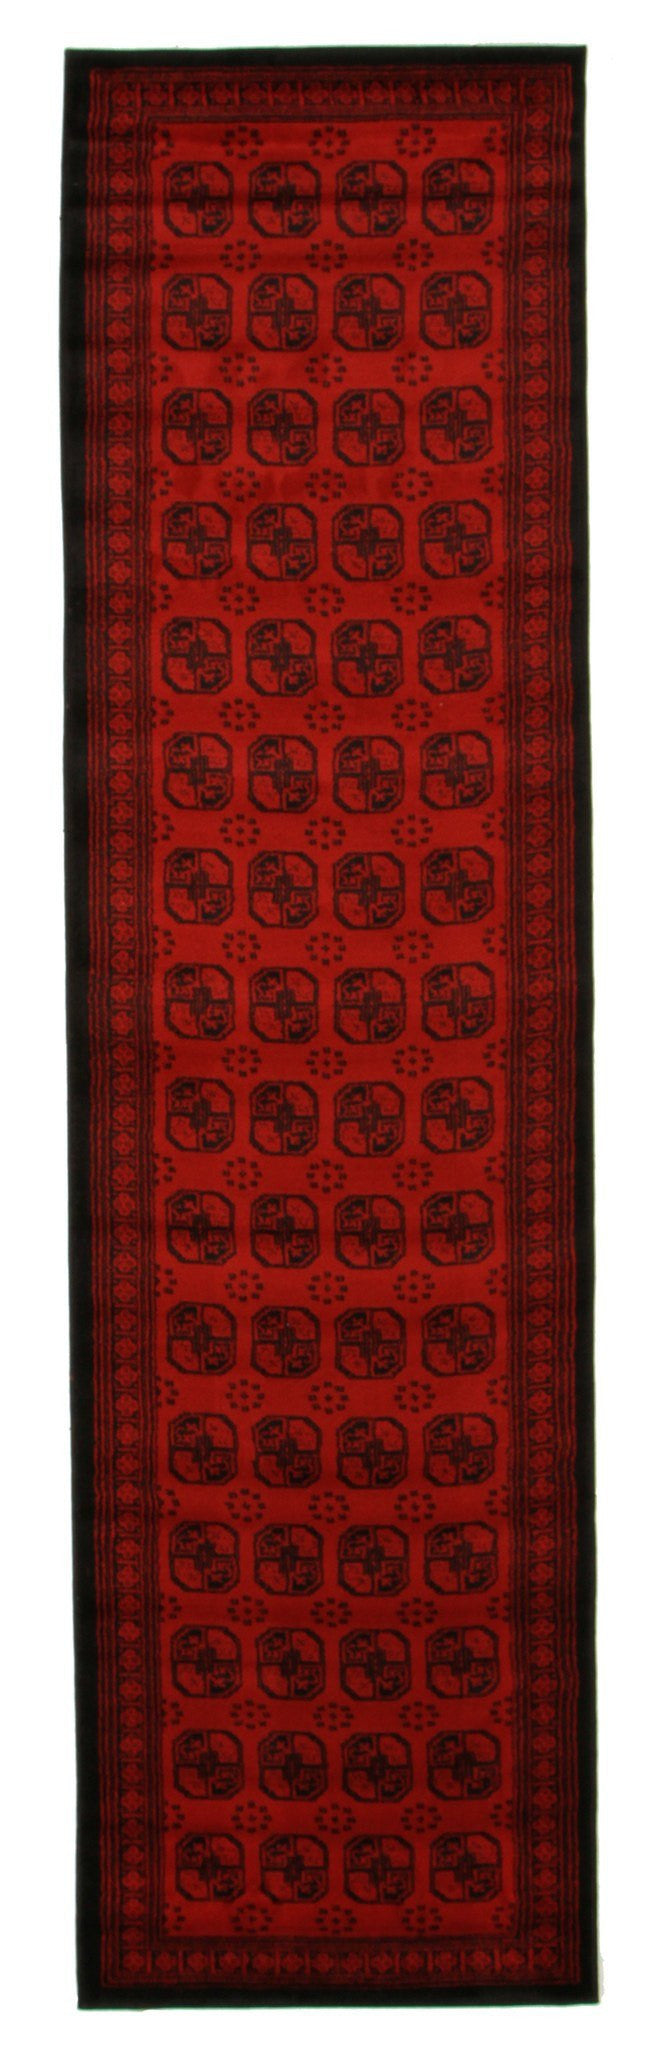 Classic Afghan Design Rug Red Runner